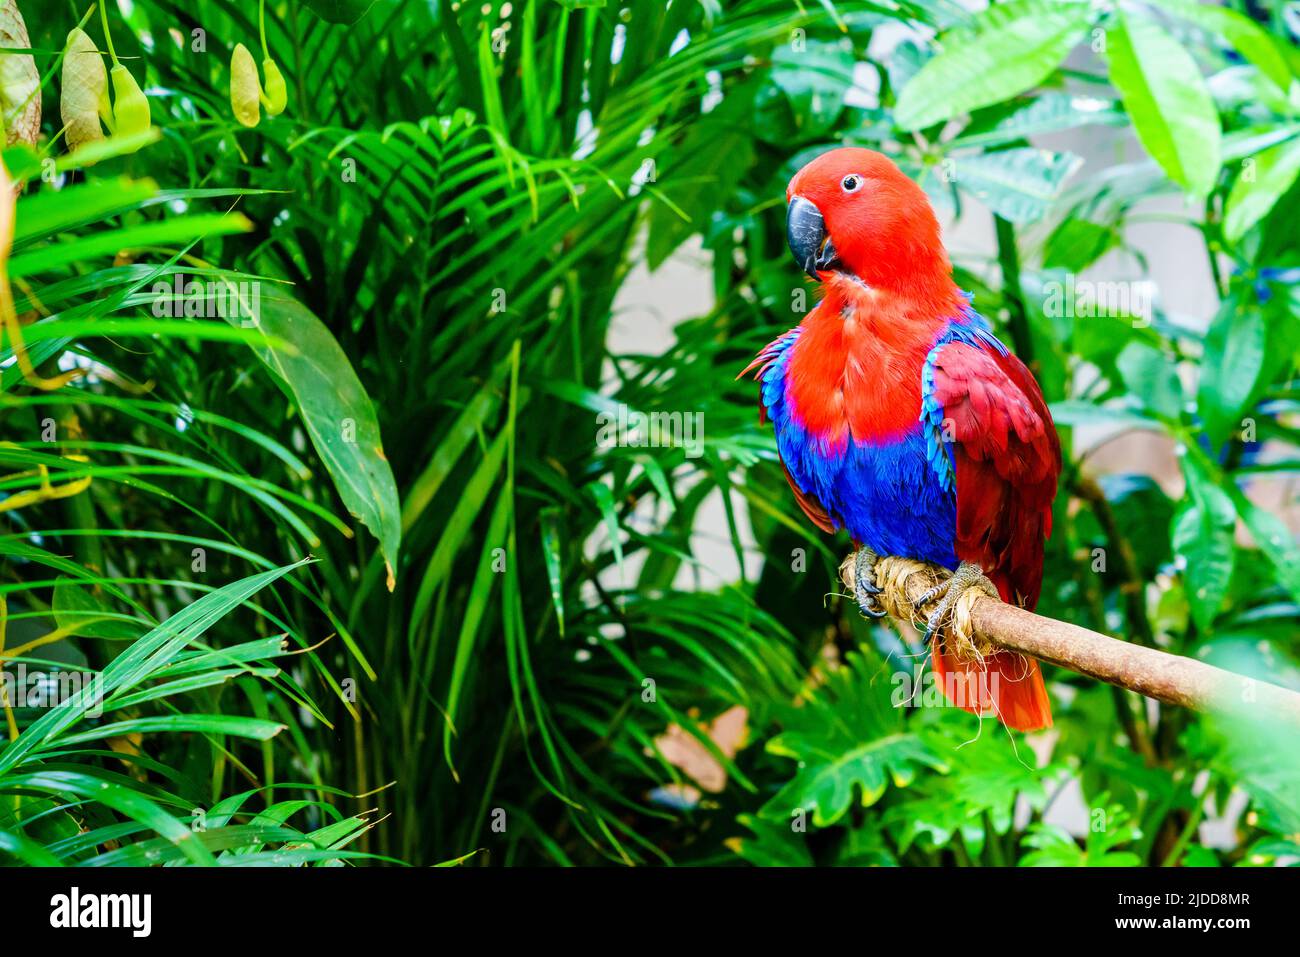 Portrait of Papuan Eclectus parrot in a natural habitat Stock Photo